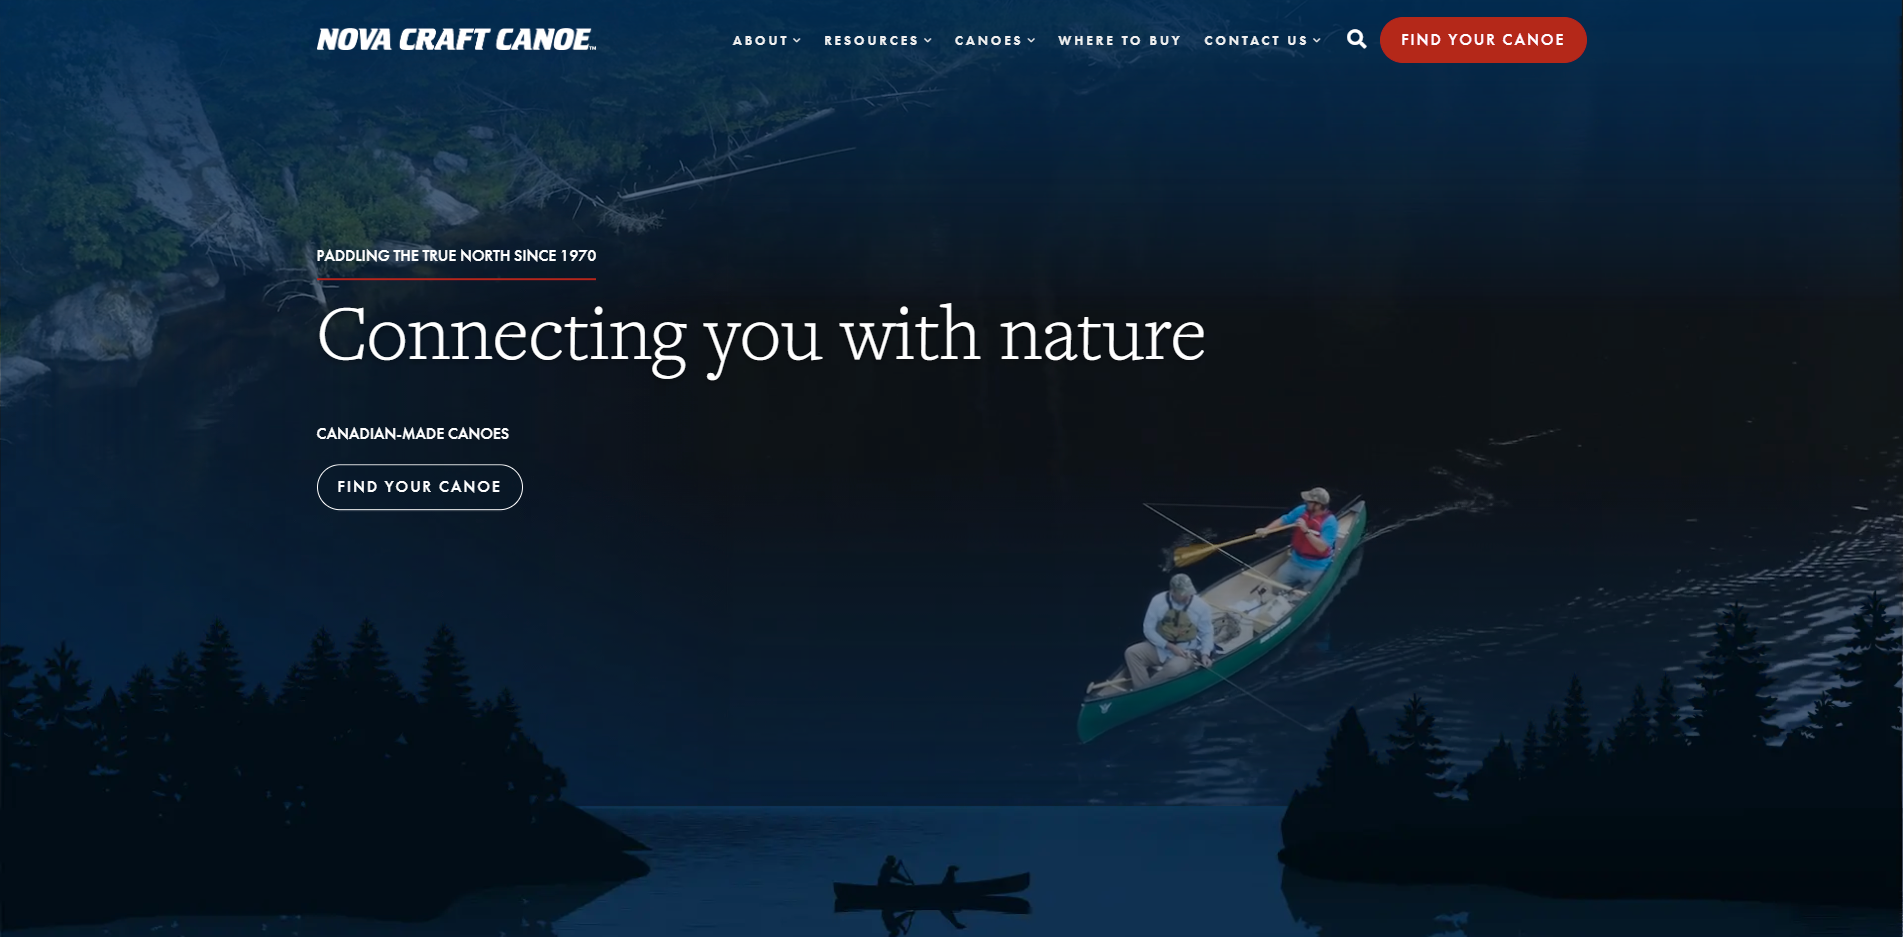 Nova Craft Canoe image